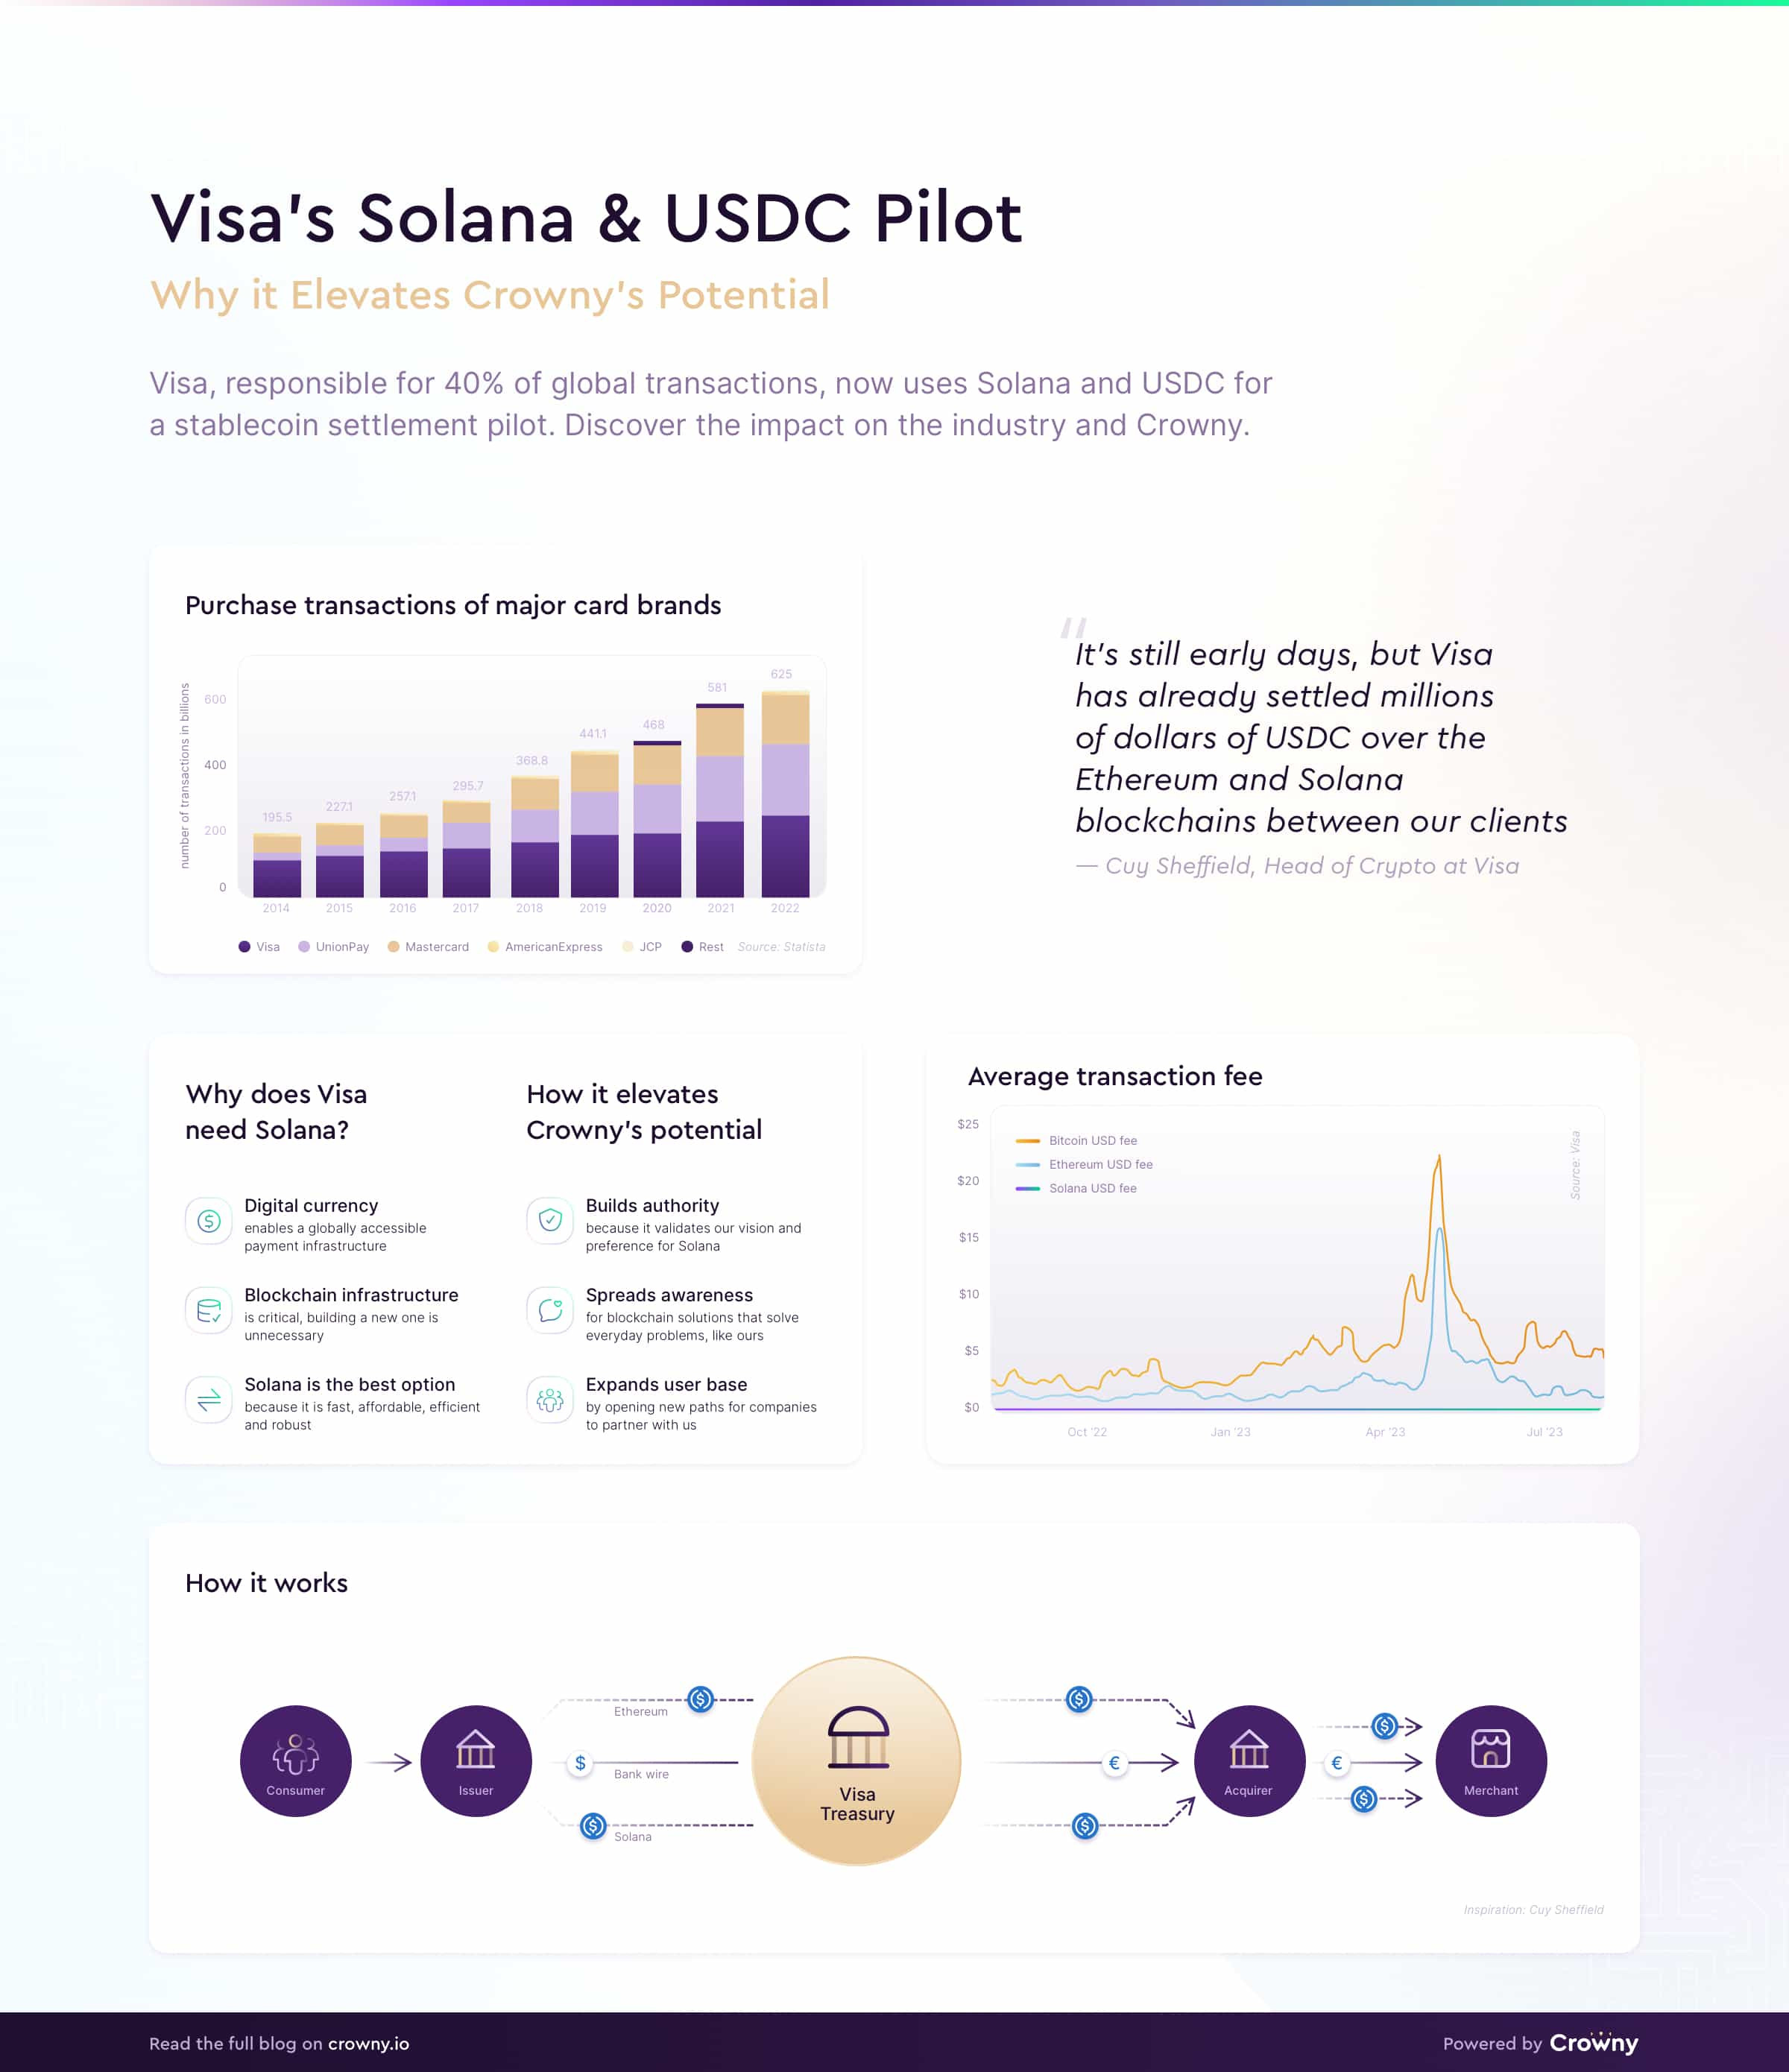 Visa's Solana and USDC Pilot infographic